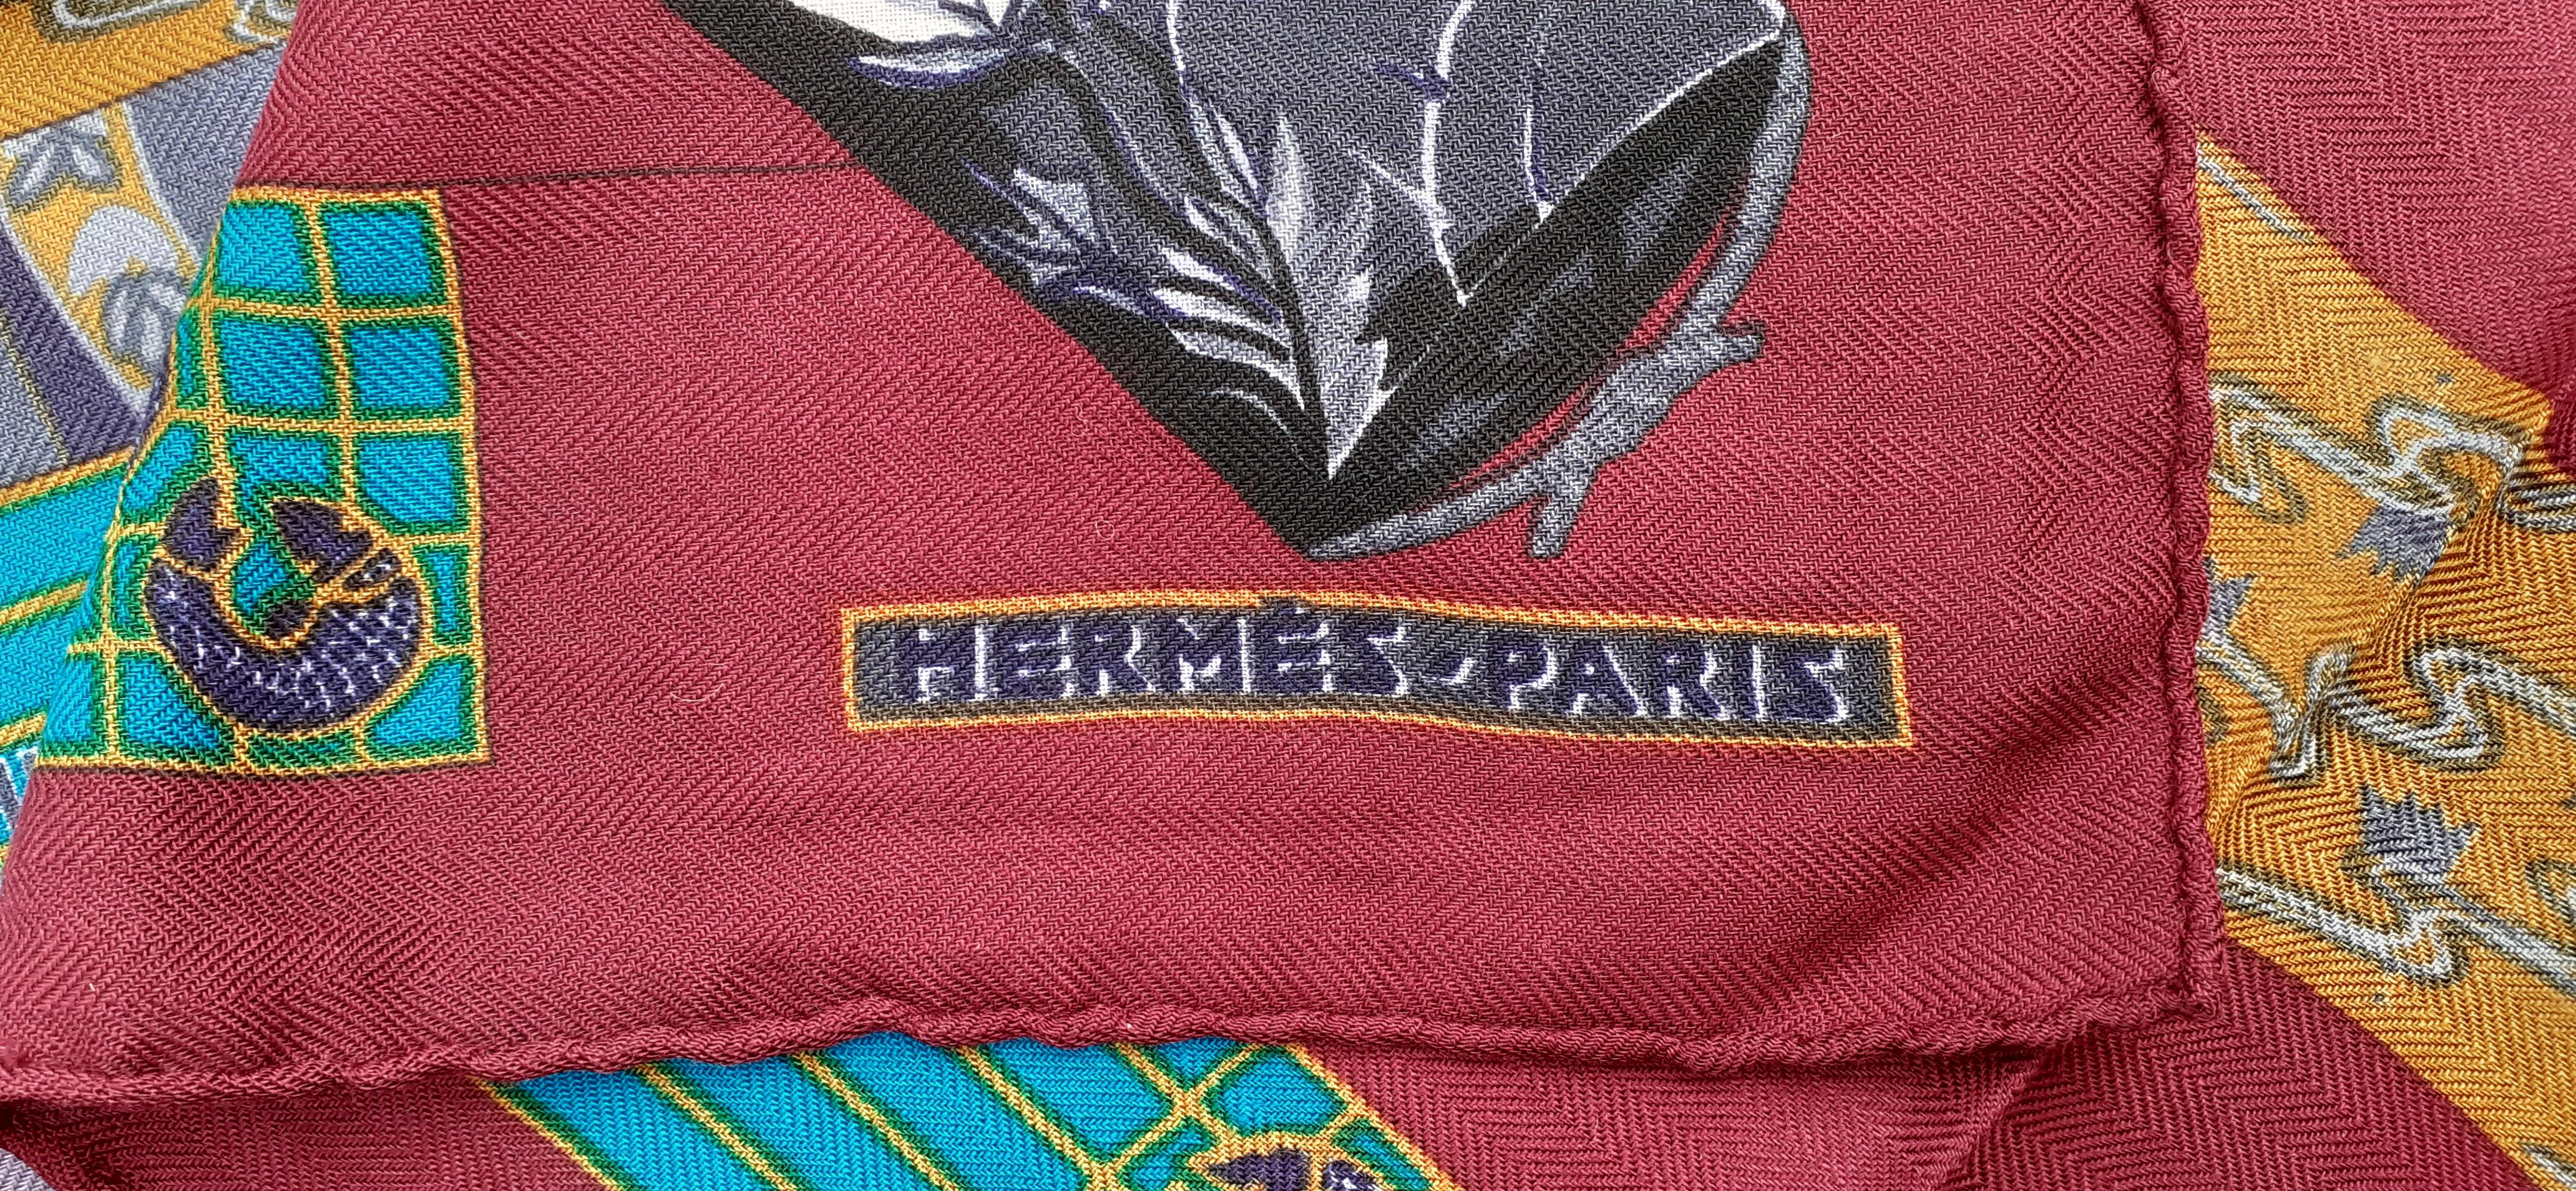 Hermès Shawl Scarf Kimonos et Inros Annie Faivre Cashmere Silk 54 inches 11